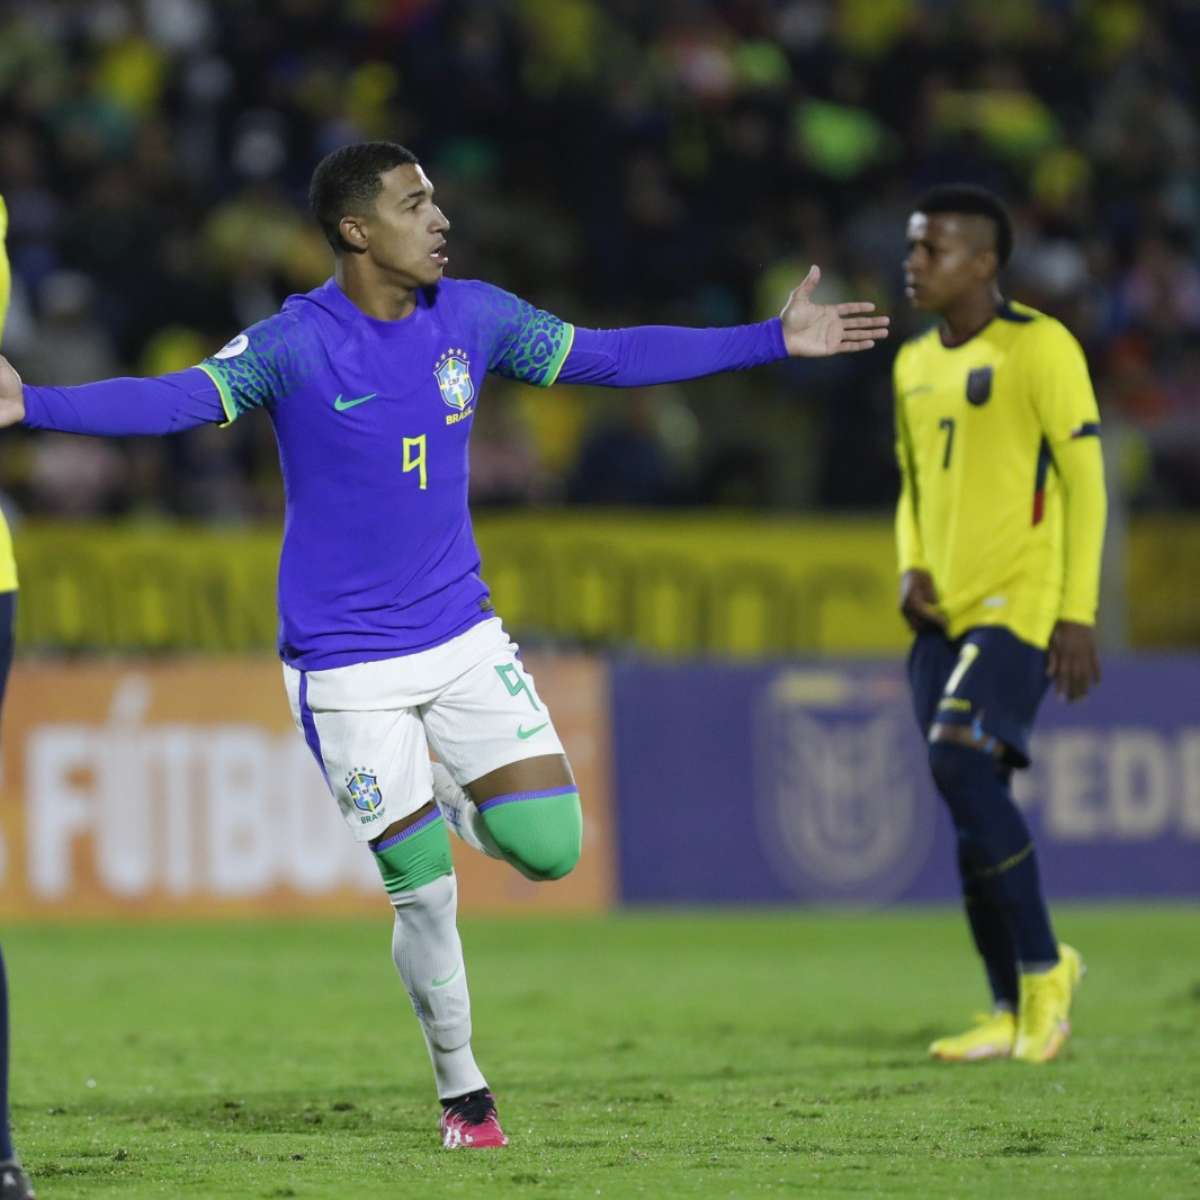 Venezuela ganha vaga e o título da CONMEBOL Sub17 se define na